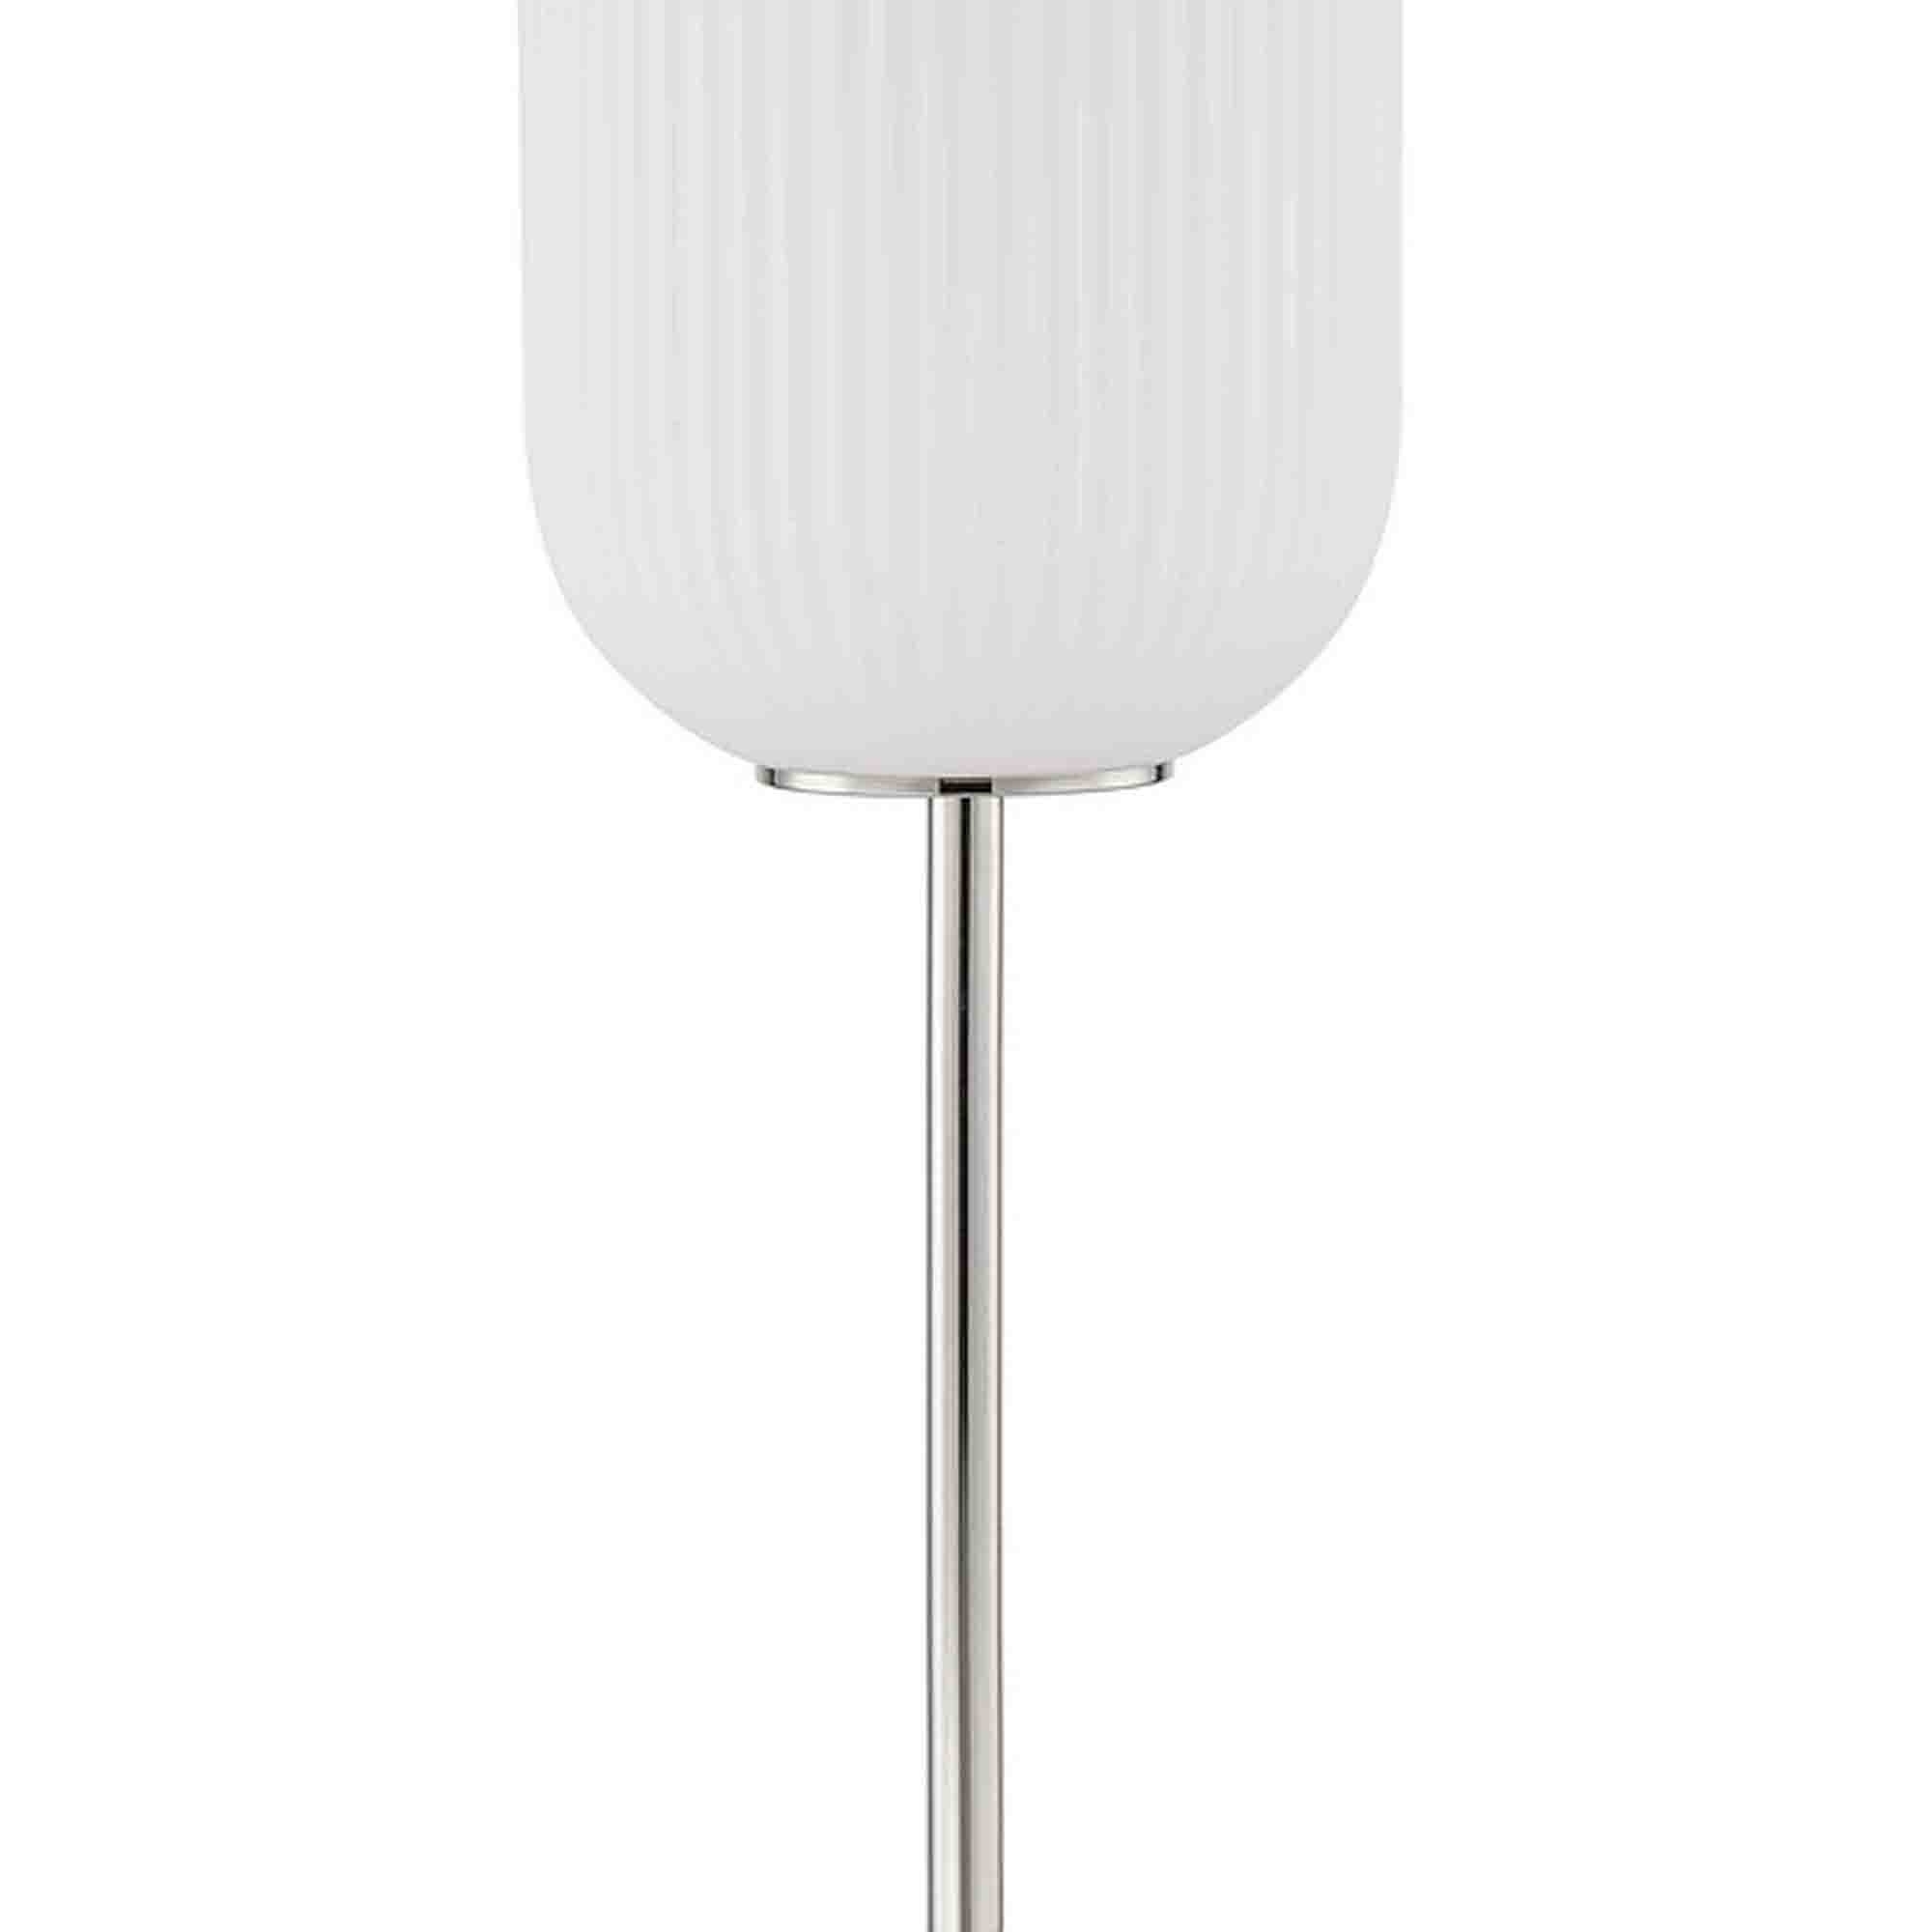 Aimy 58 Inch Floor Lamp, LED Glass Shade, Metal, Chrome And White Finish -Saltoro Sherpi